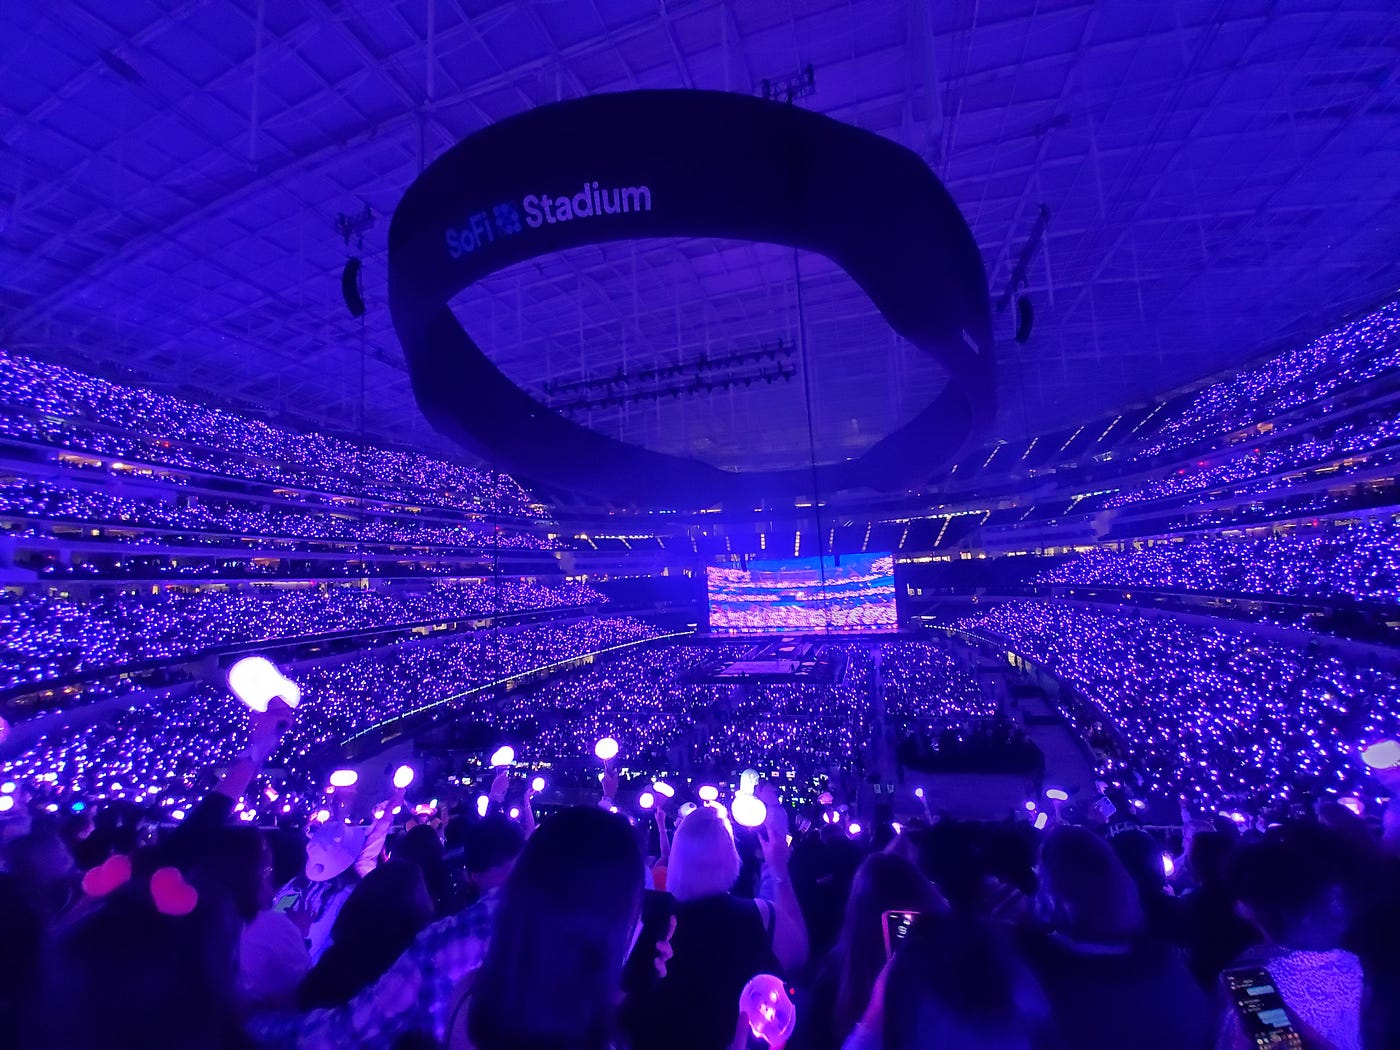 A deep purple light over a stadium full of people holding light sticks.